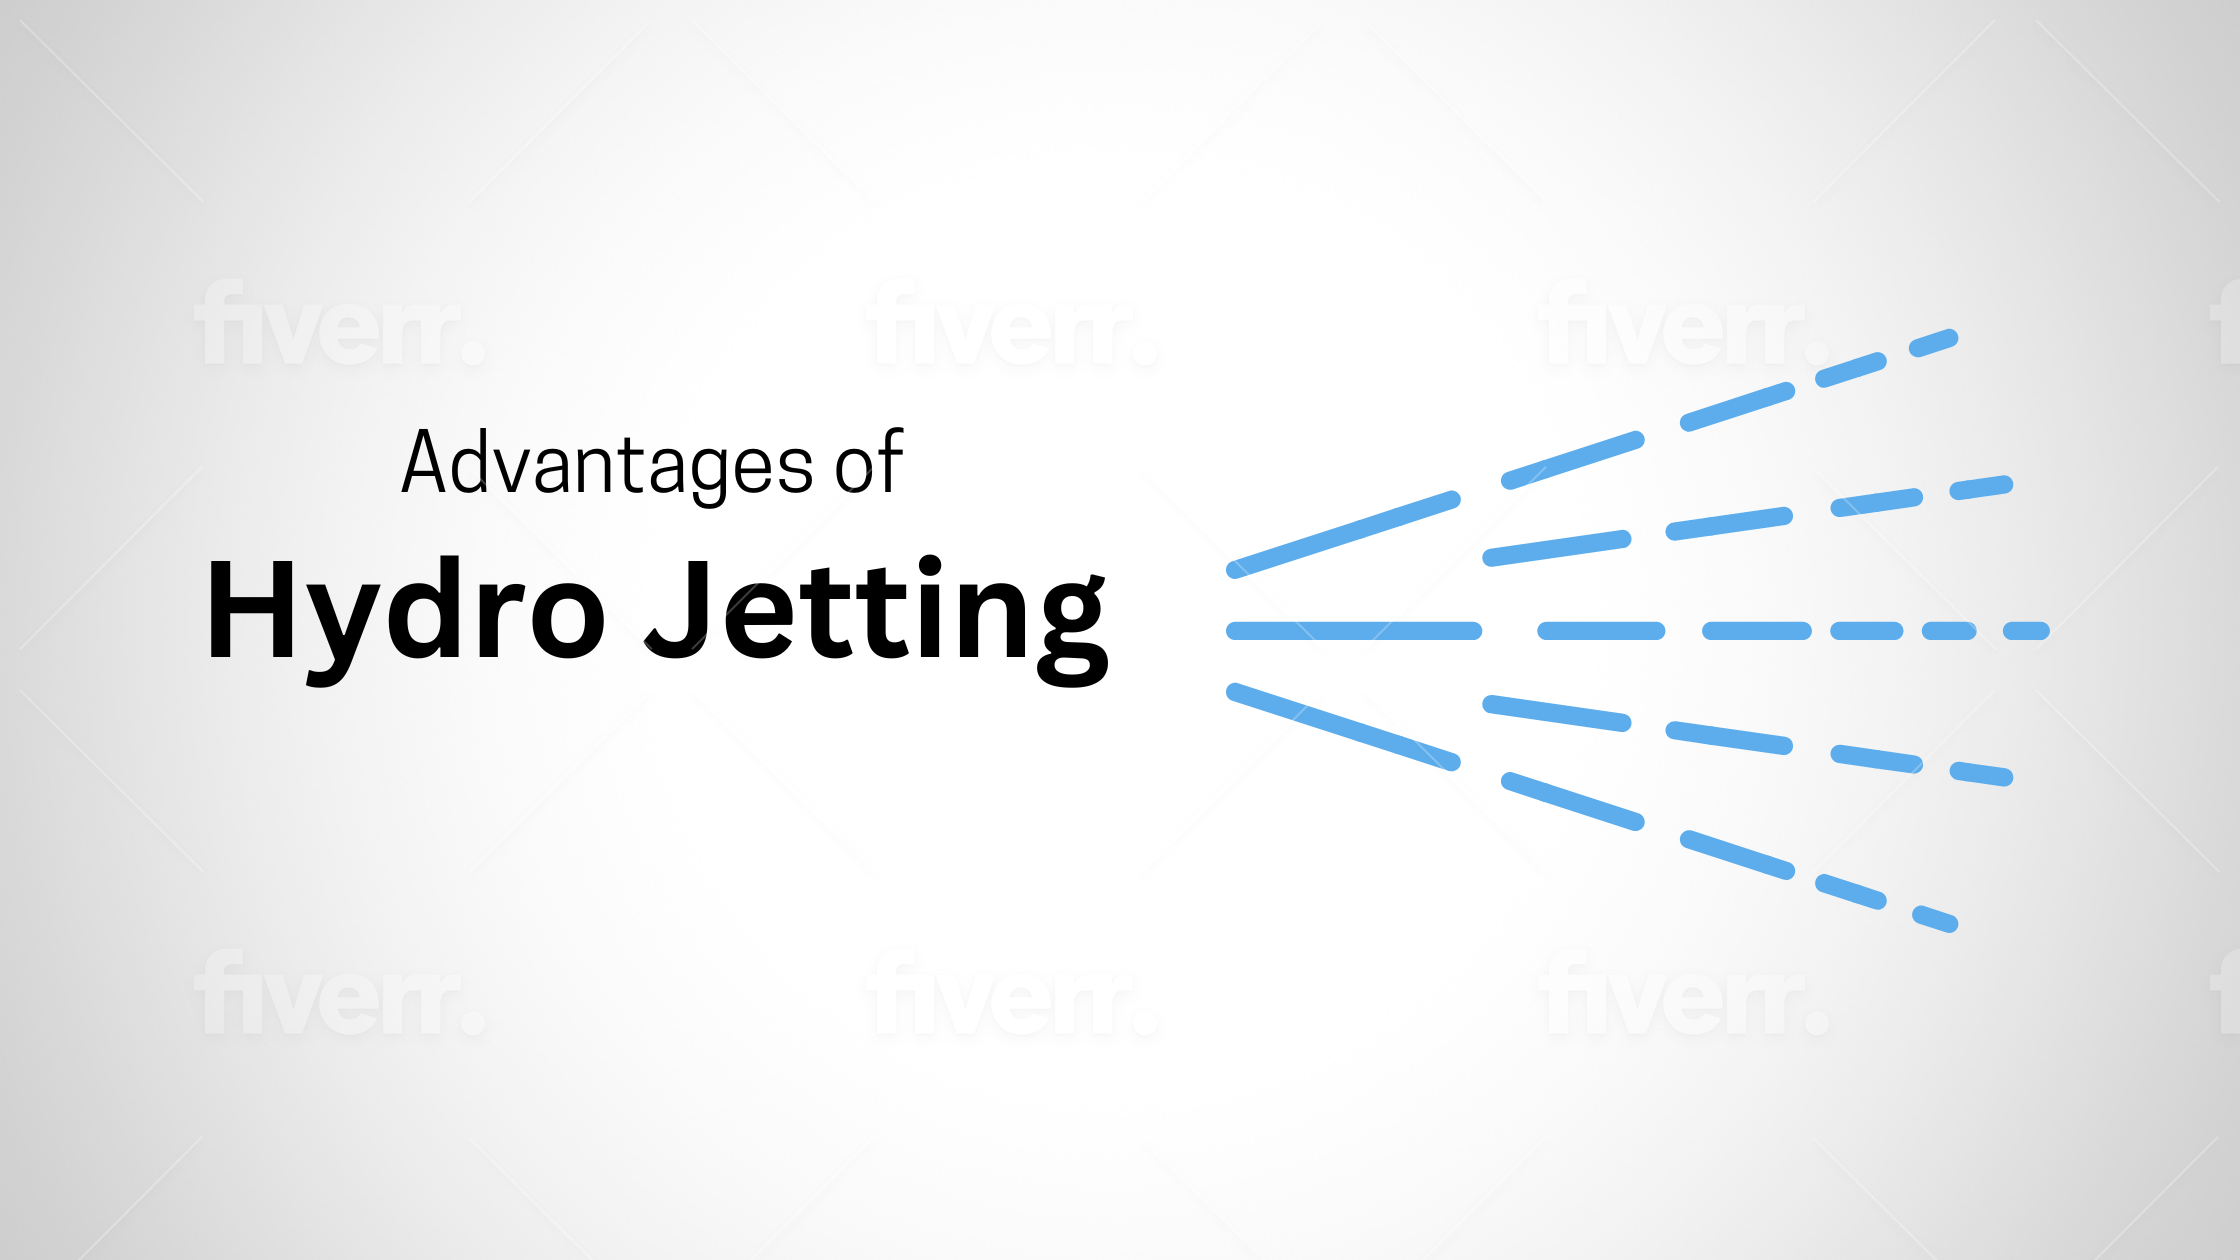 Benefits of hydro jetting